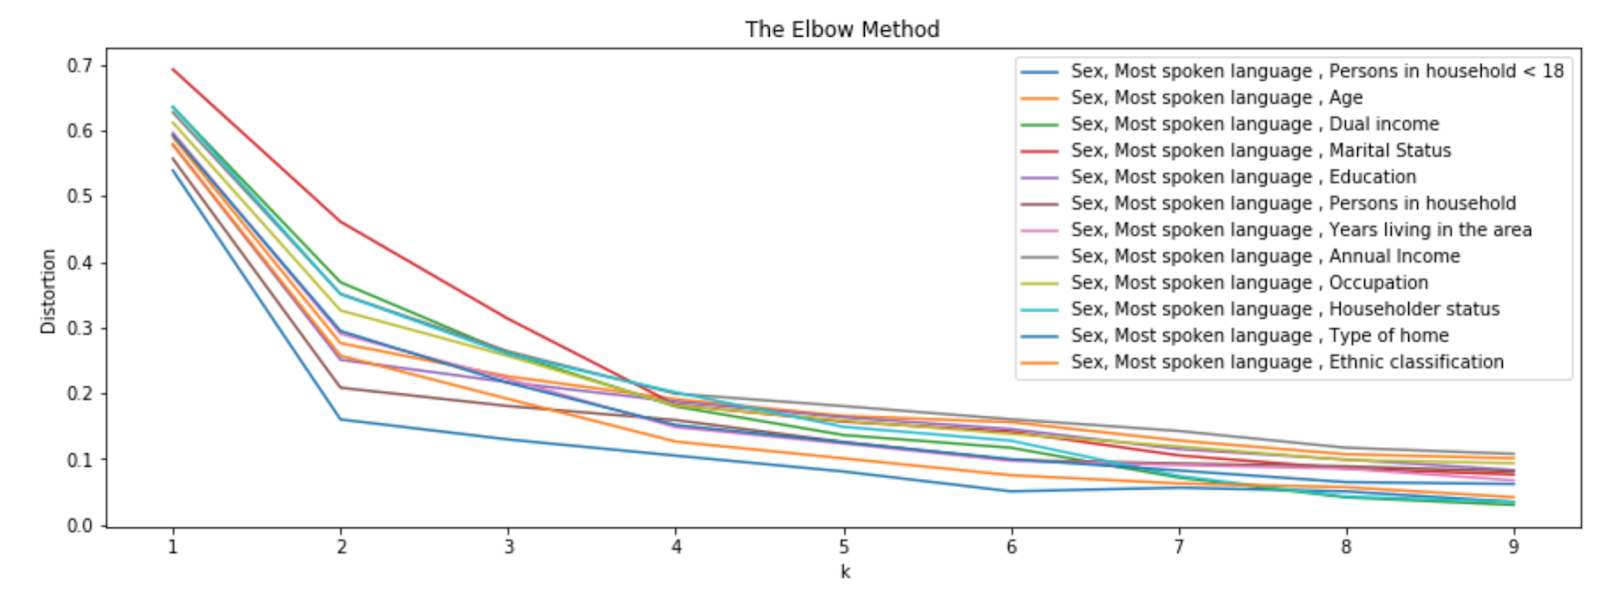 elbow method - 2+1 variables